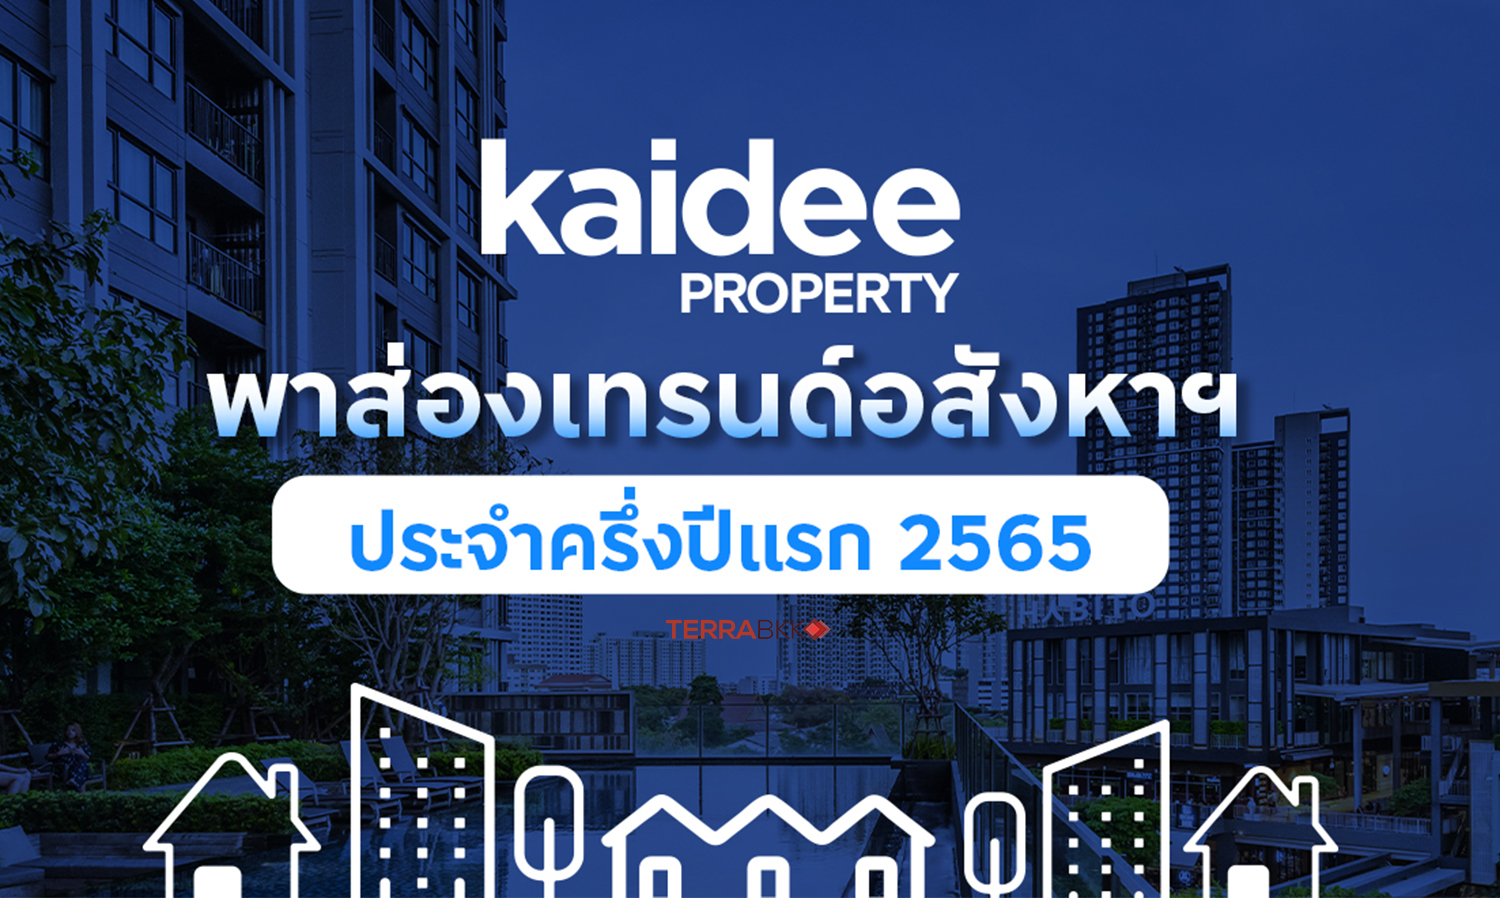  Kaidee Property เผยอินไซต์ครึ่งปีแรก คนไทยครองดีมานด์หลักของอสังหาไทย  เล็งจับตาตลาดต่างชาติกลับมาคึกหลังผ่อนปรนโควิด – 19